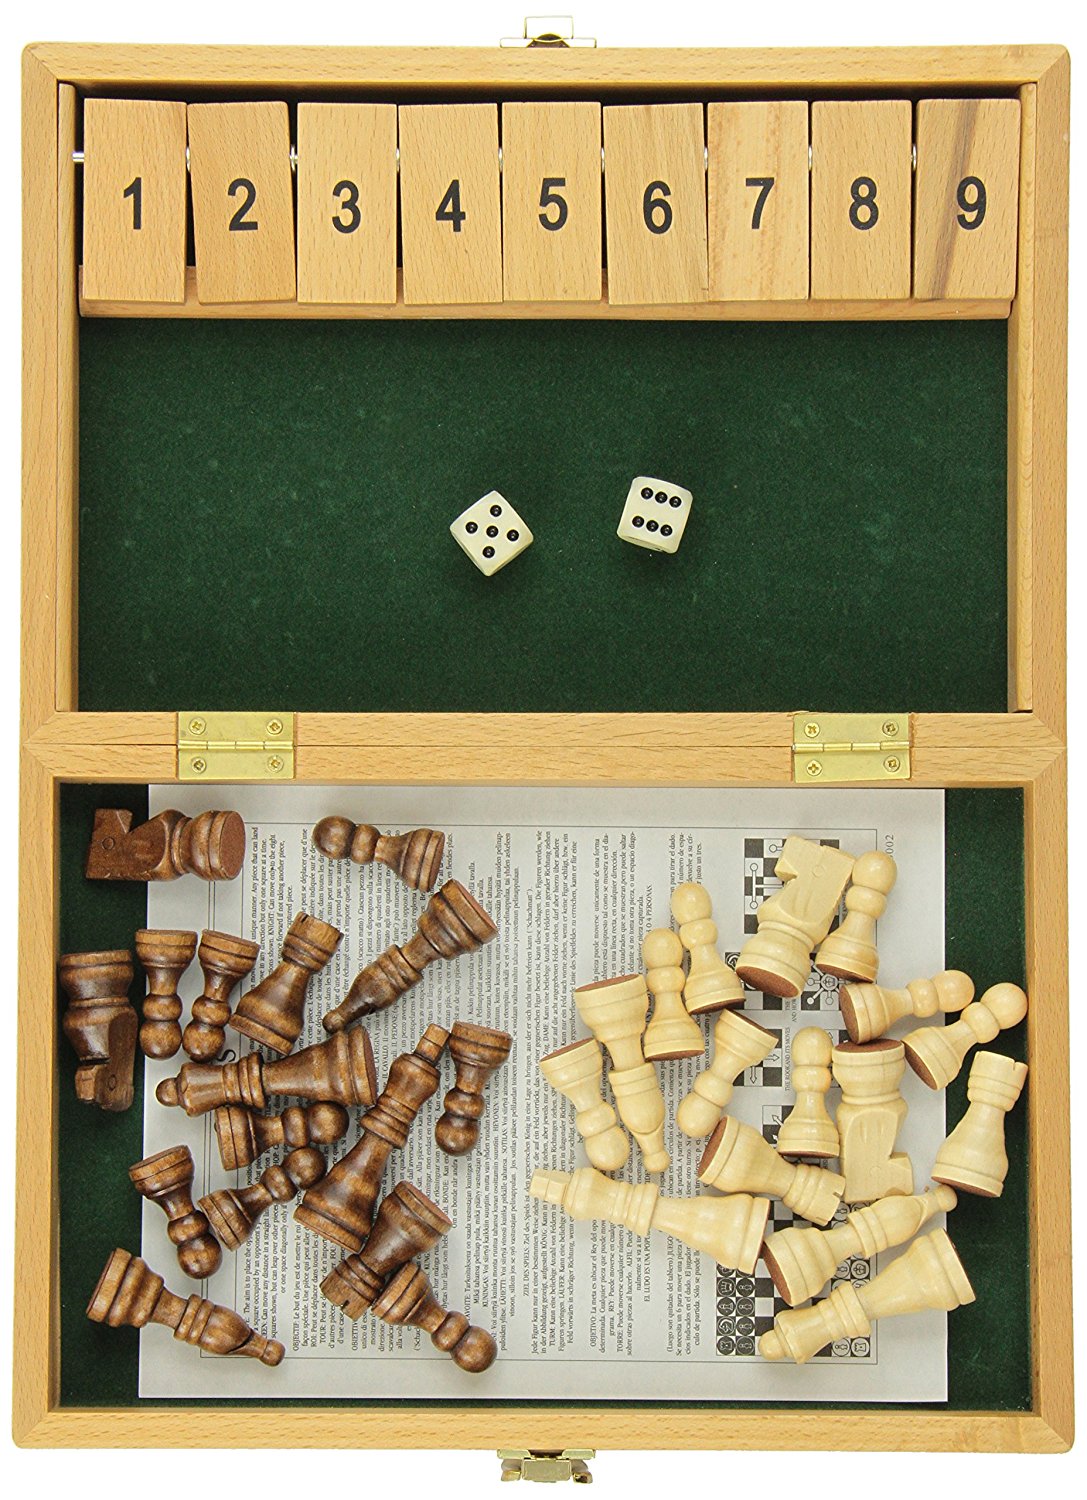 Recreational Chess & Shut The Box Strategy Game Set, White/Brown